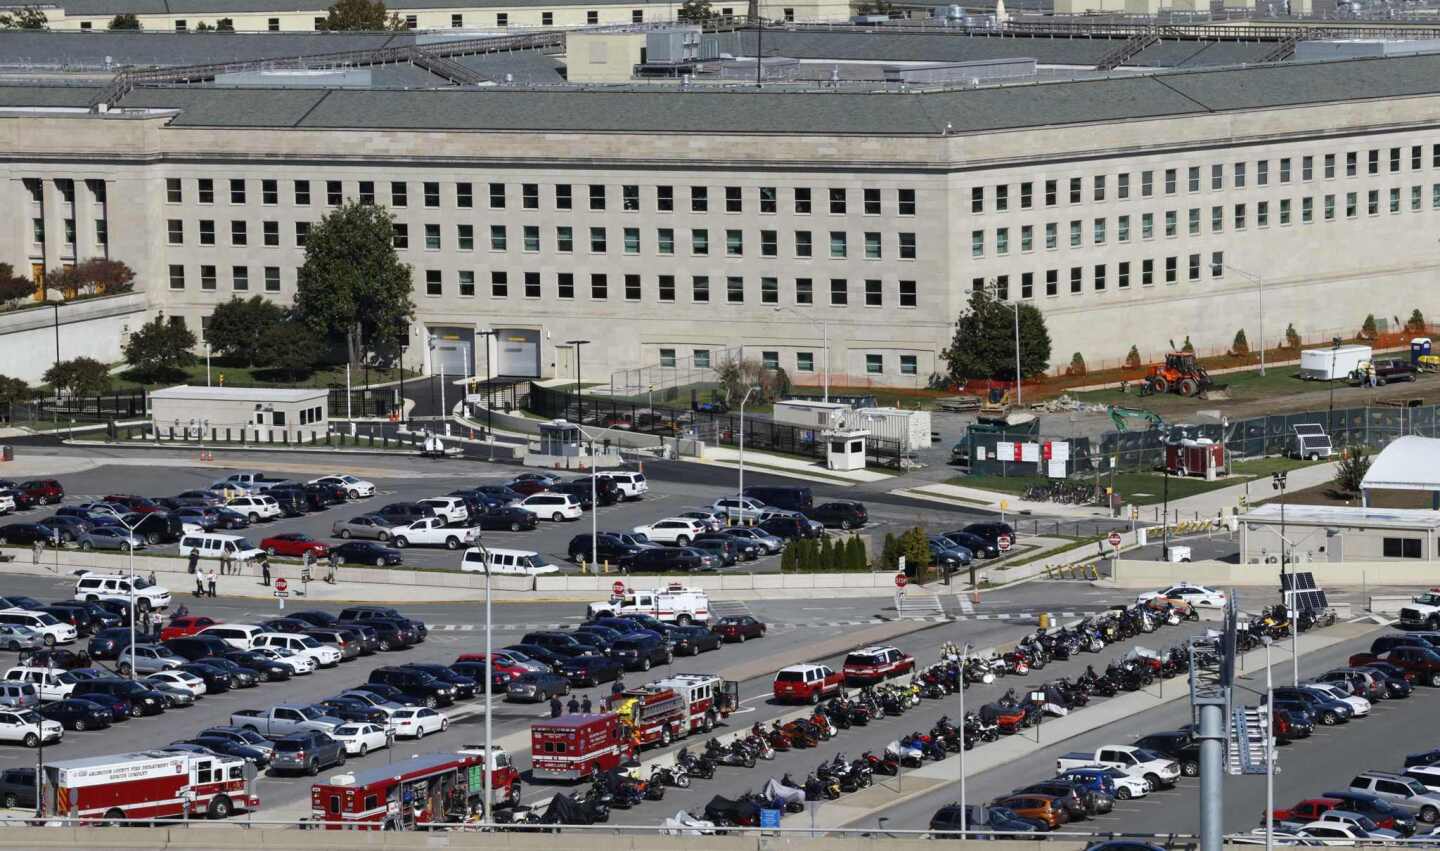 Pentagon parking lot